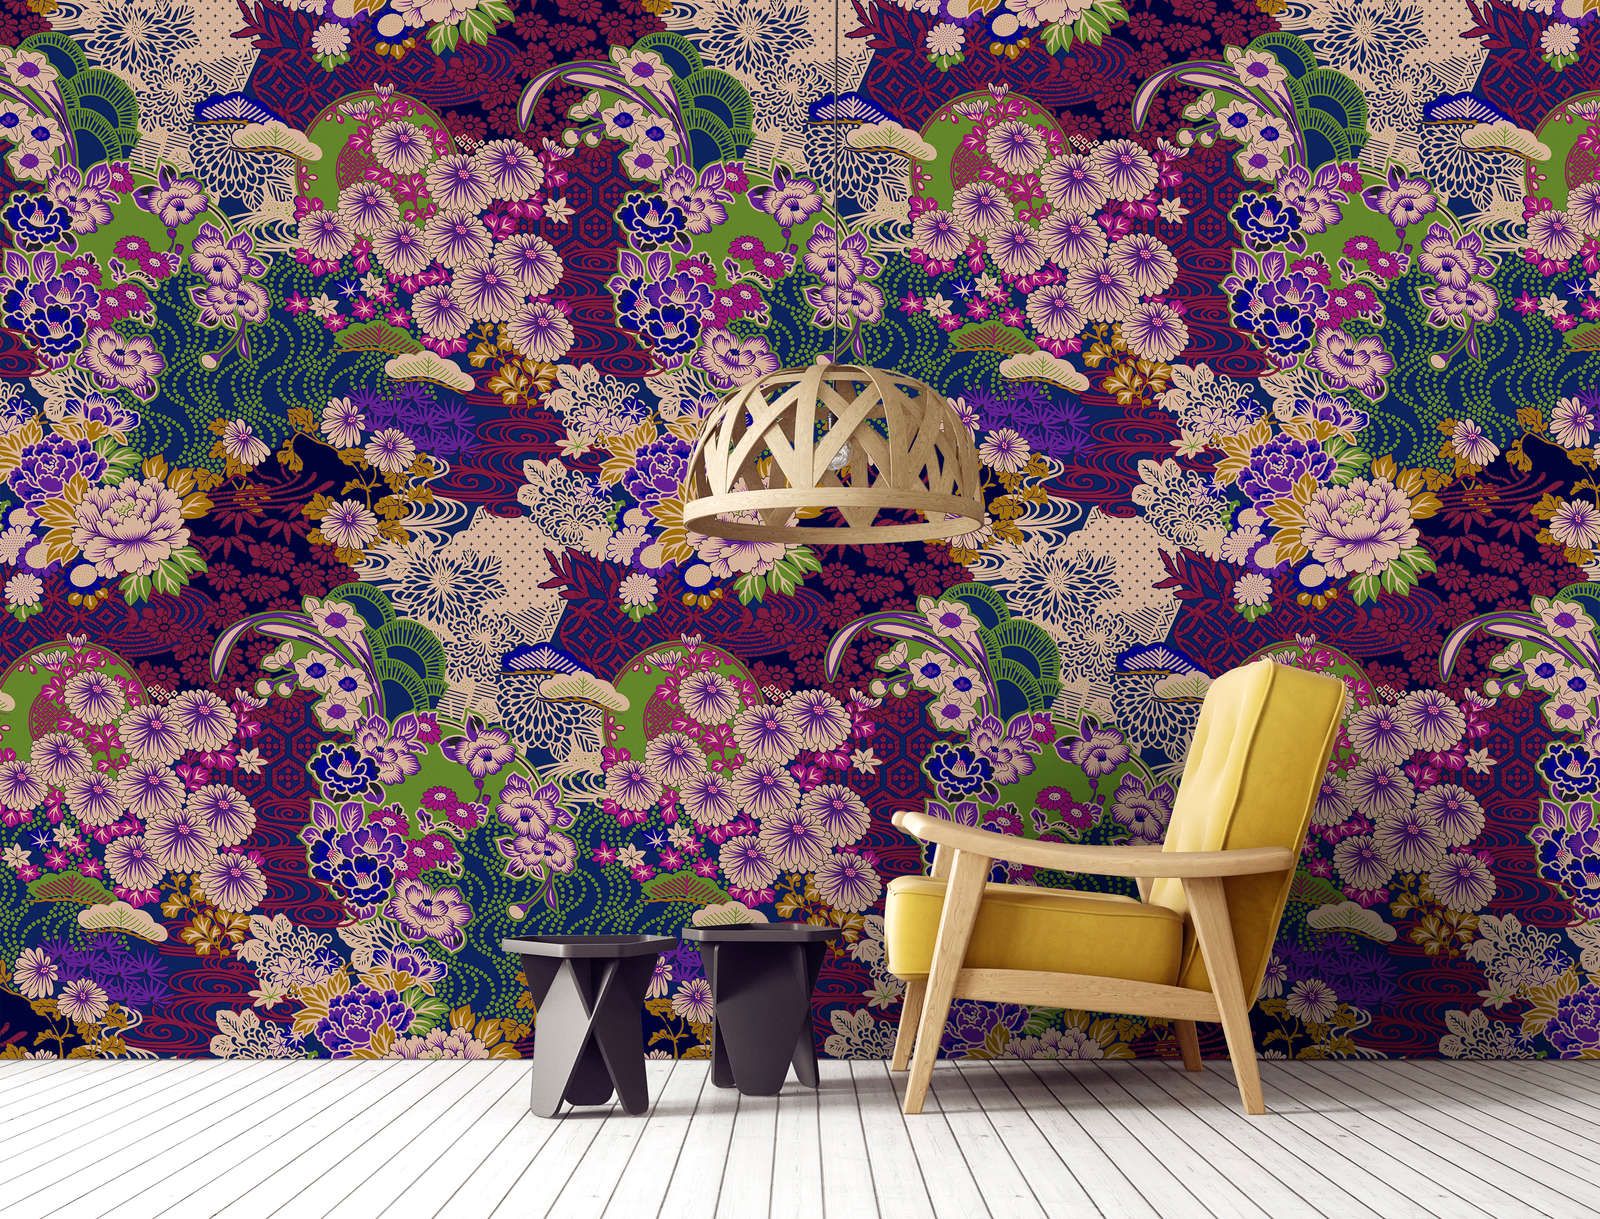             Digital behang »kimo 2« - Abstract bloemenkunstwerk - Paars, Groen | Gladde, licht parelmoerglanzende vliesstof
        